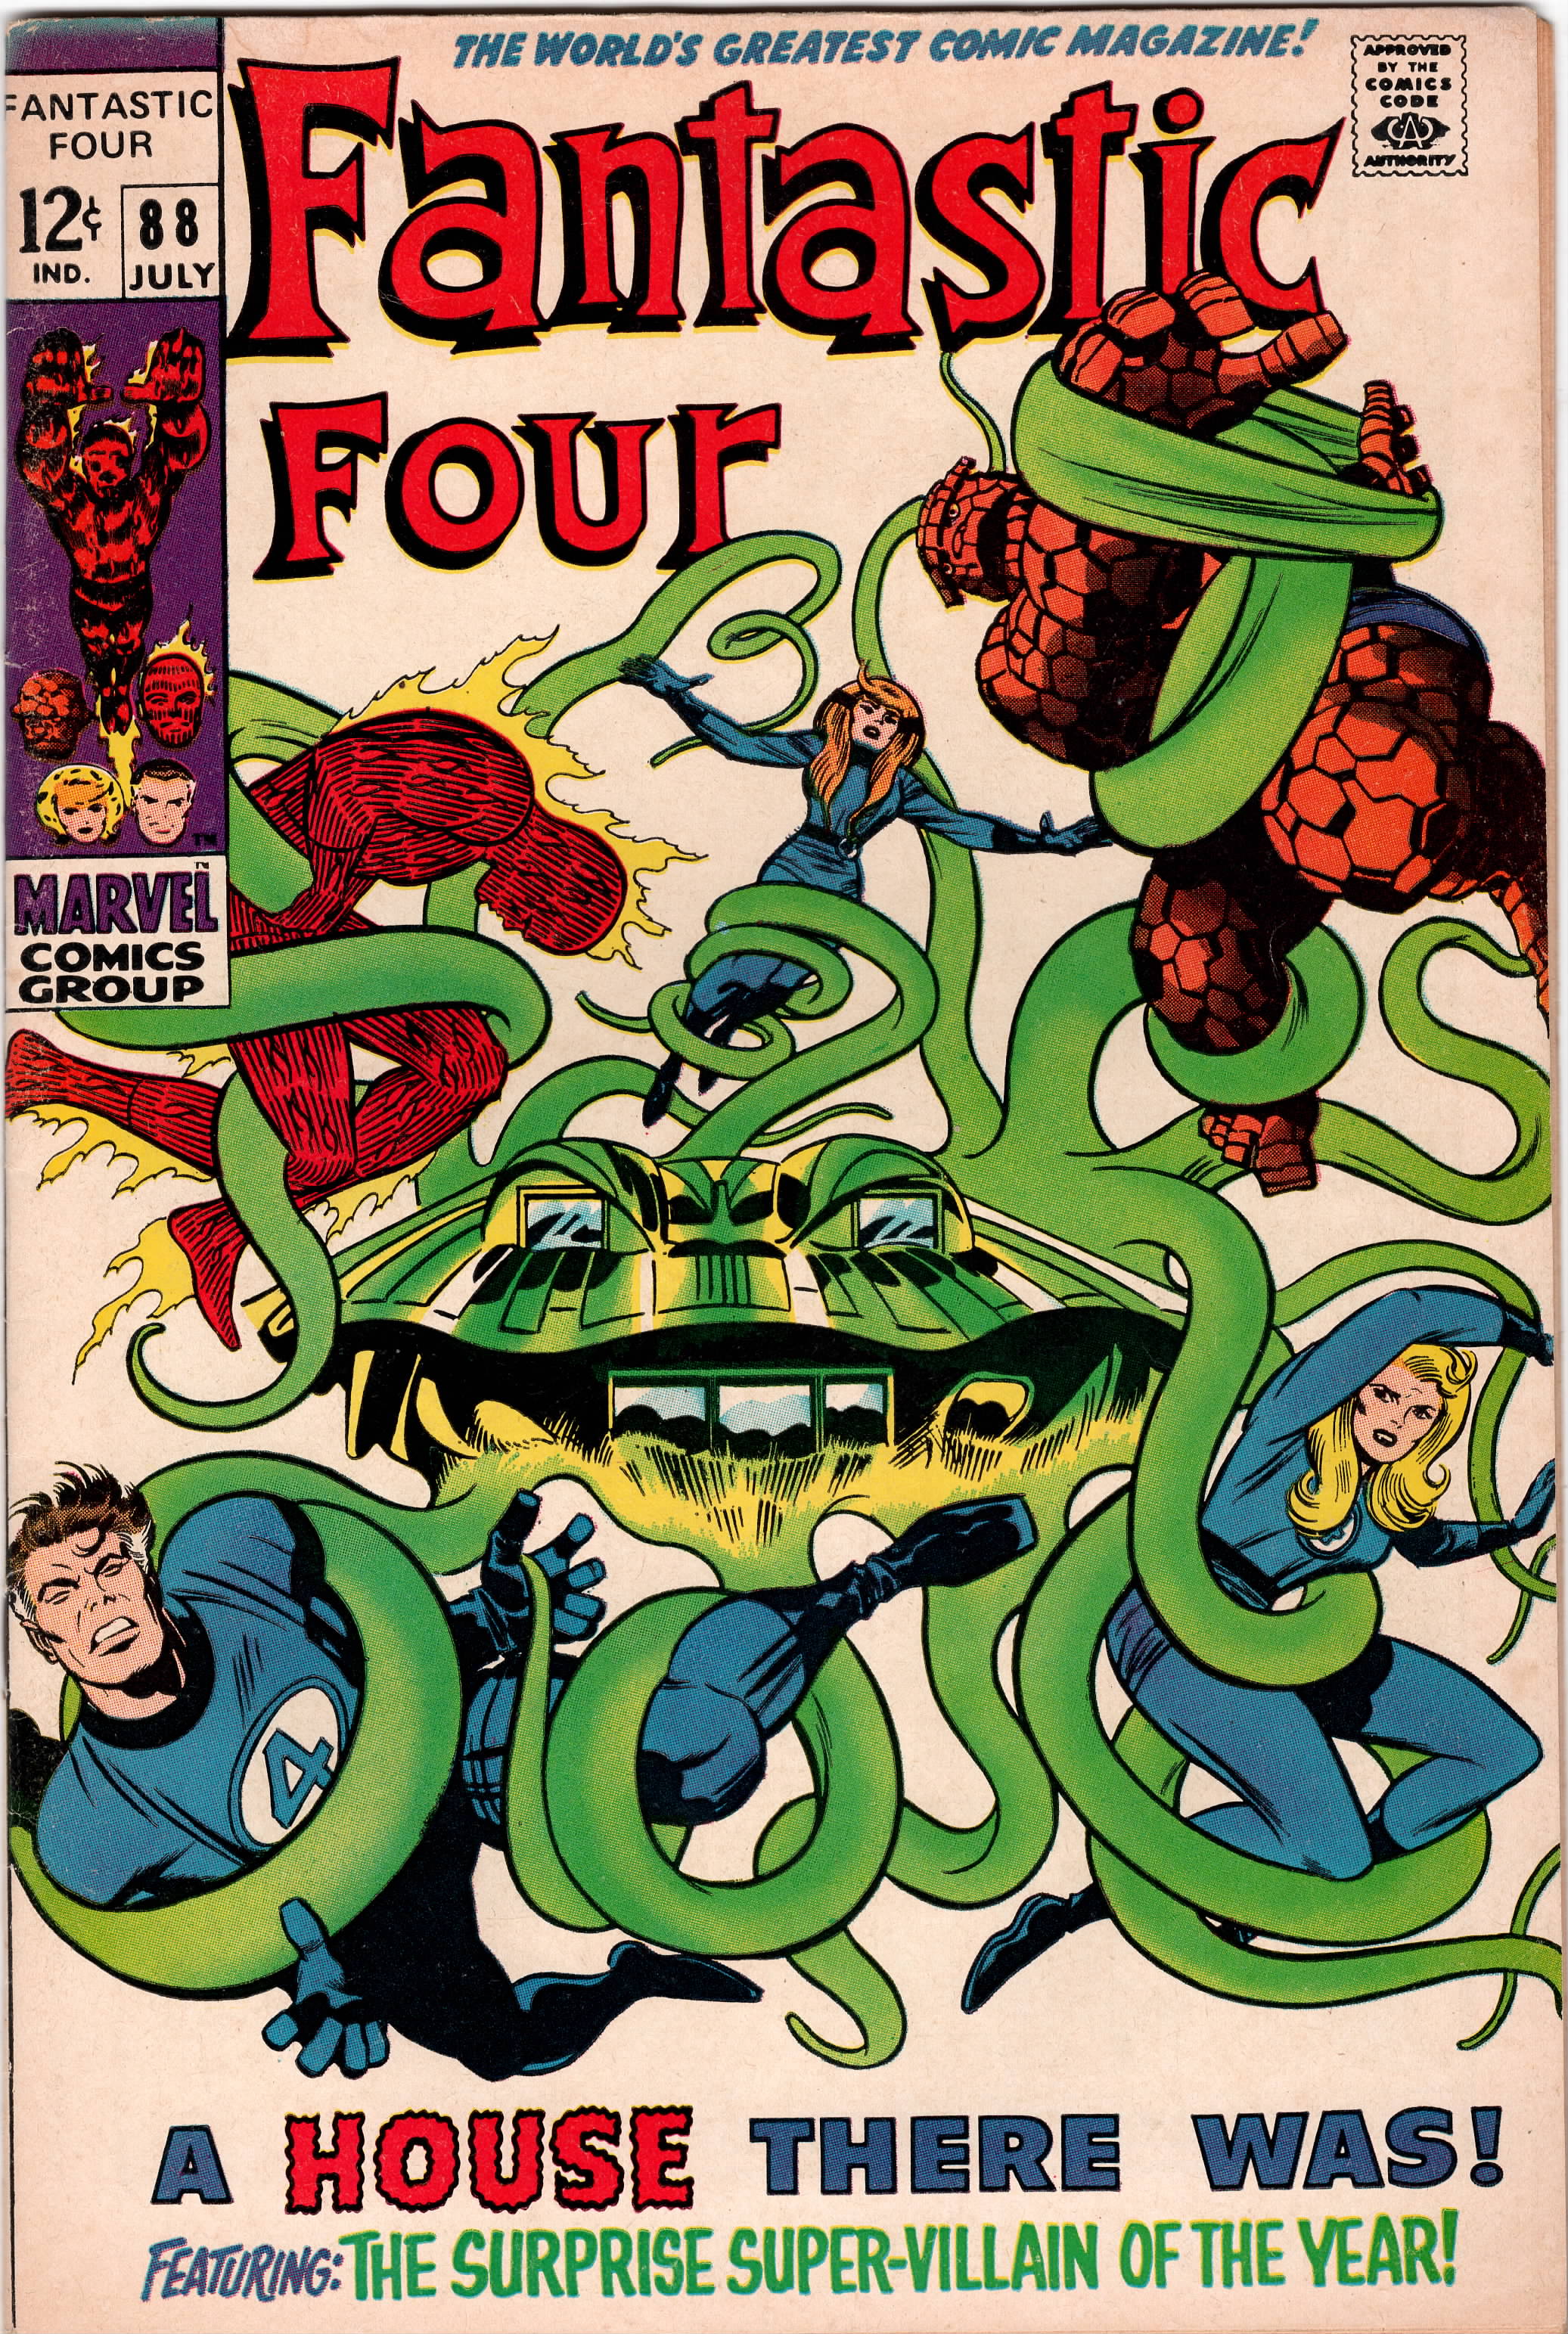 Fantastic Four #088